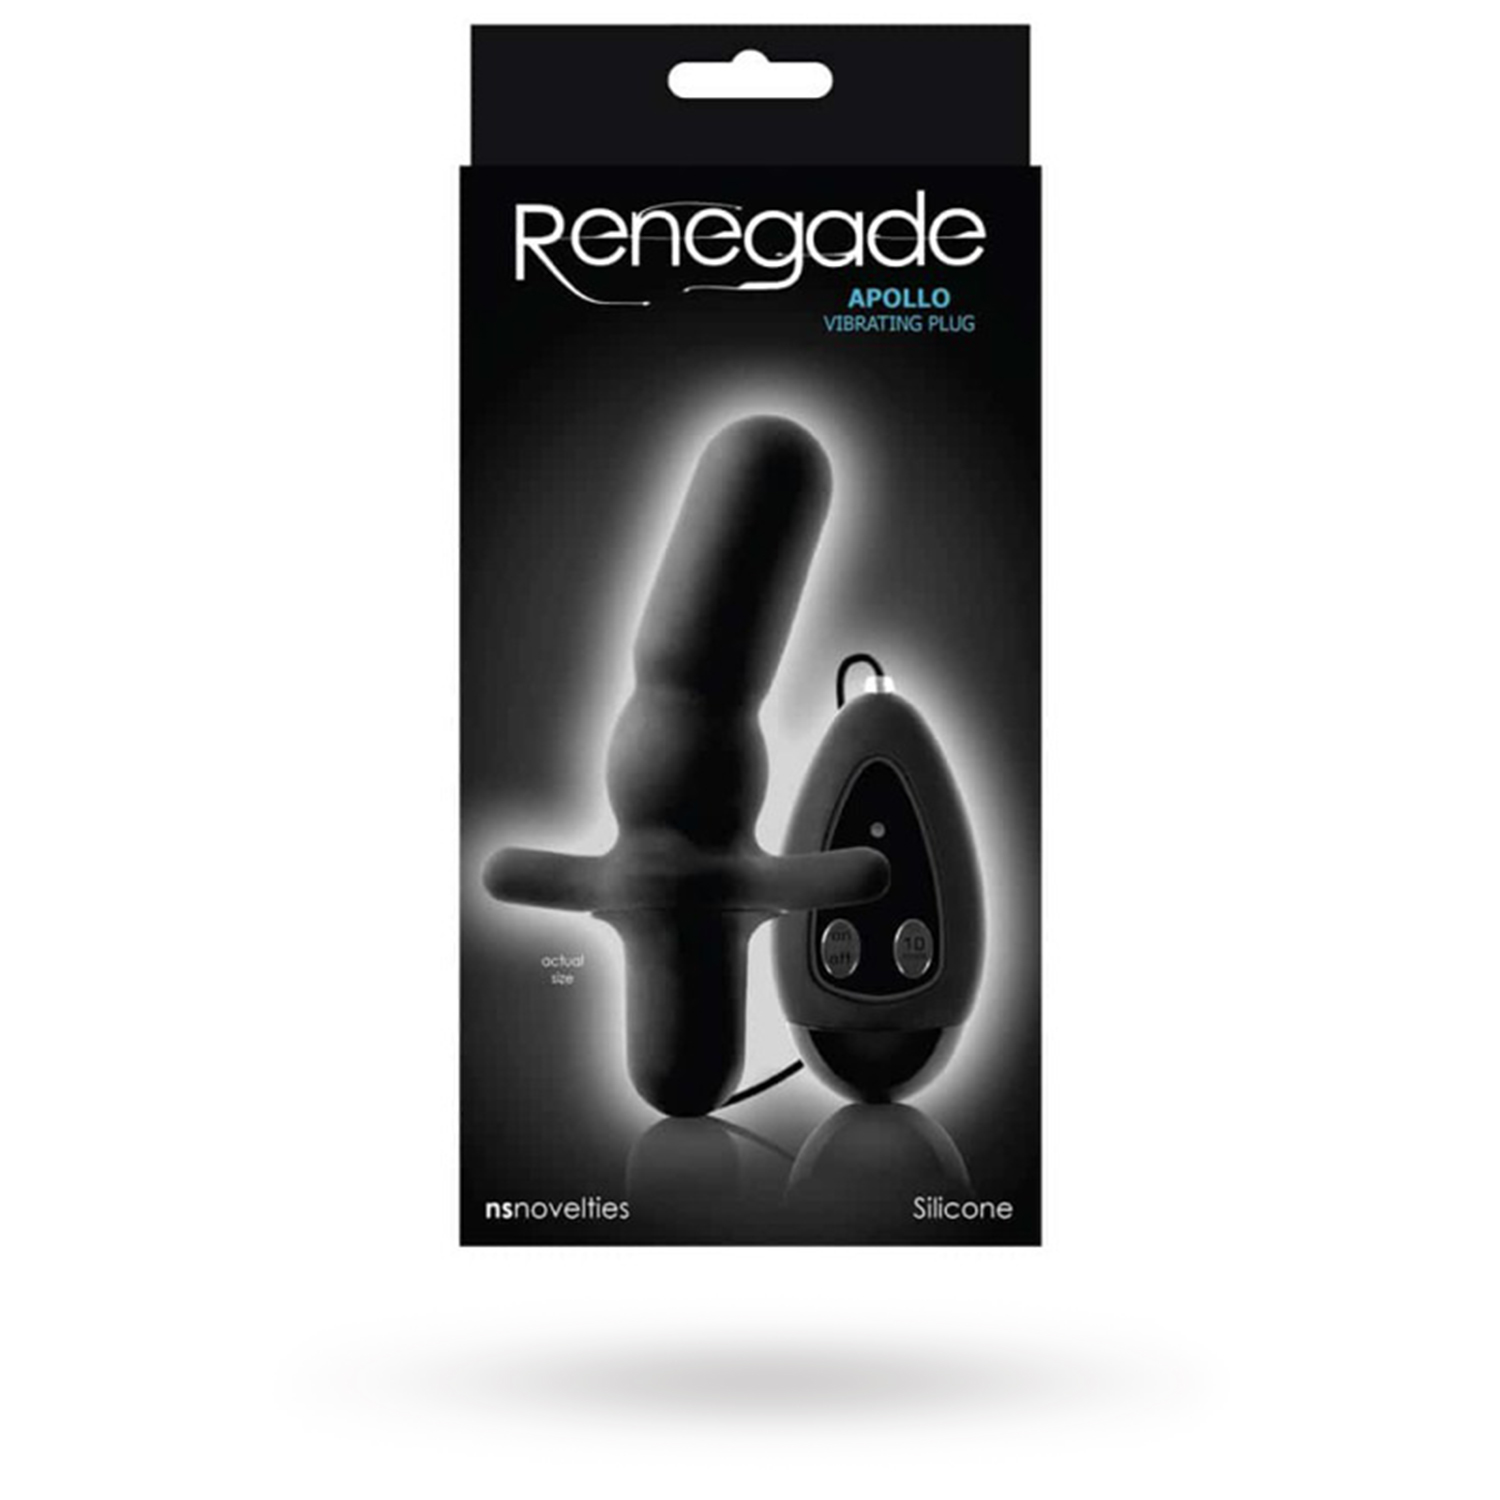 Renegade - Apollo Vibrating Plug